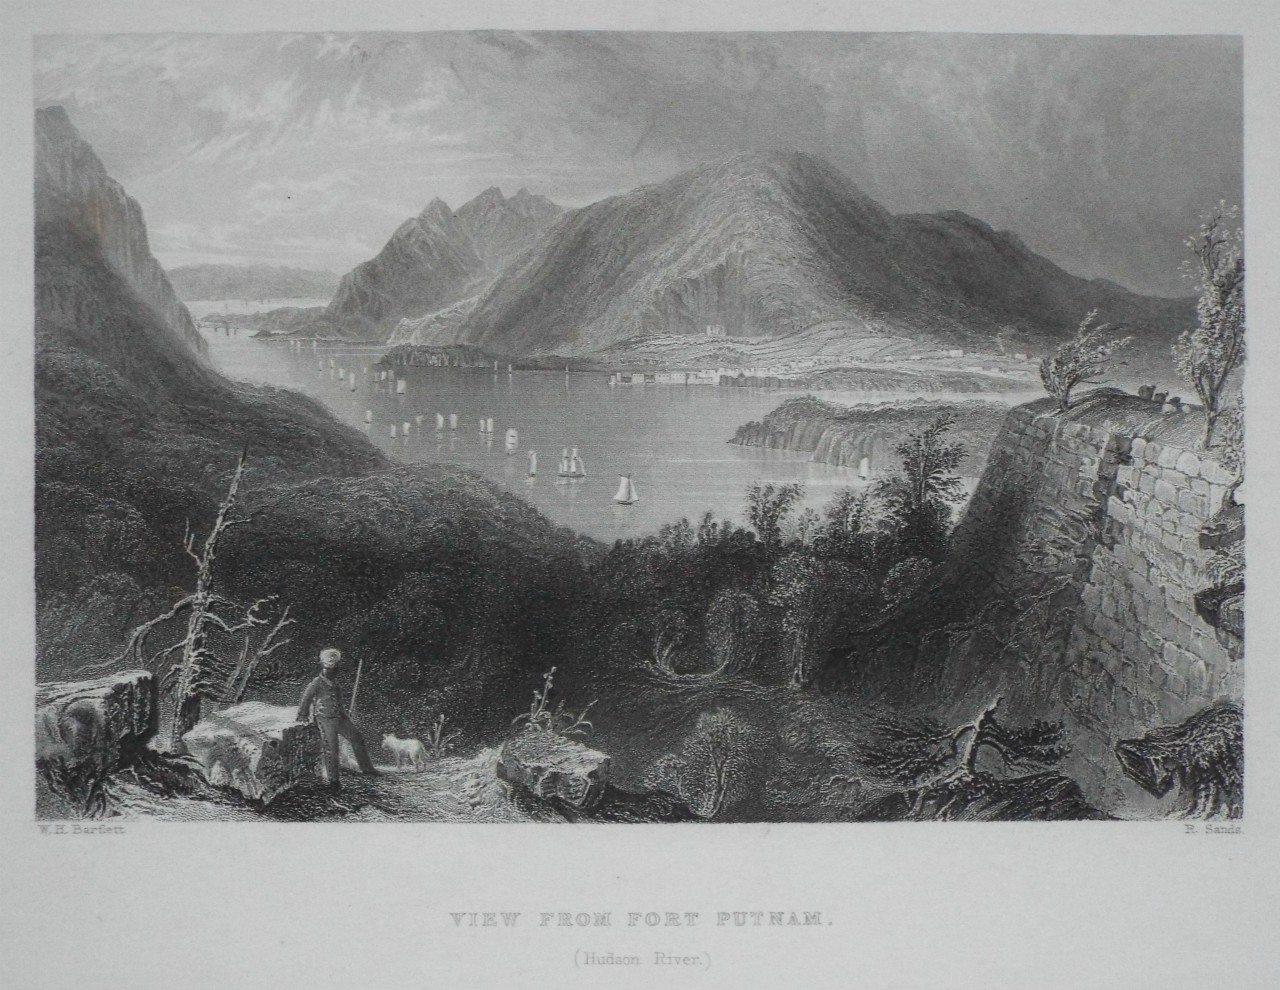 Print - View from Fort Putnam. (Hudson River) - Sands